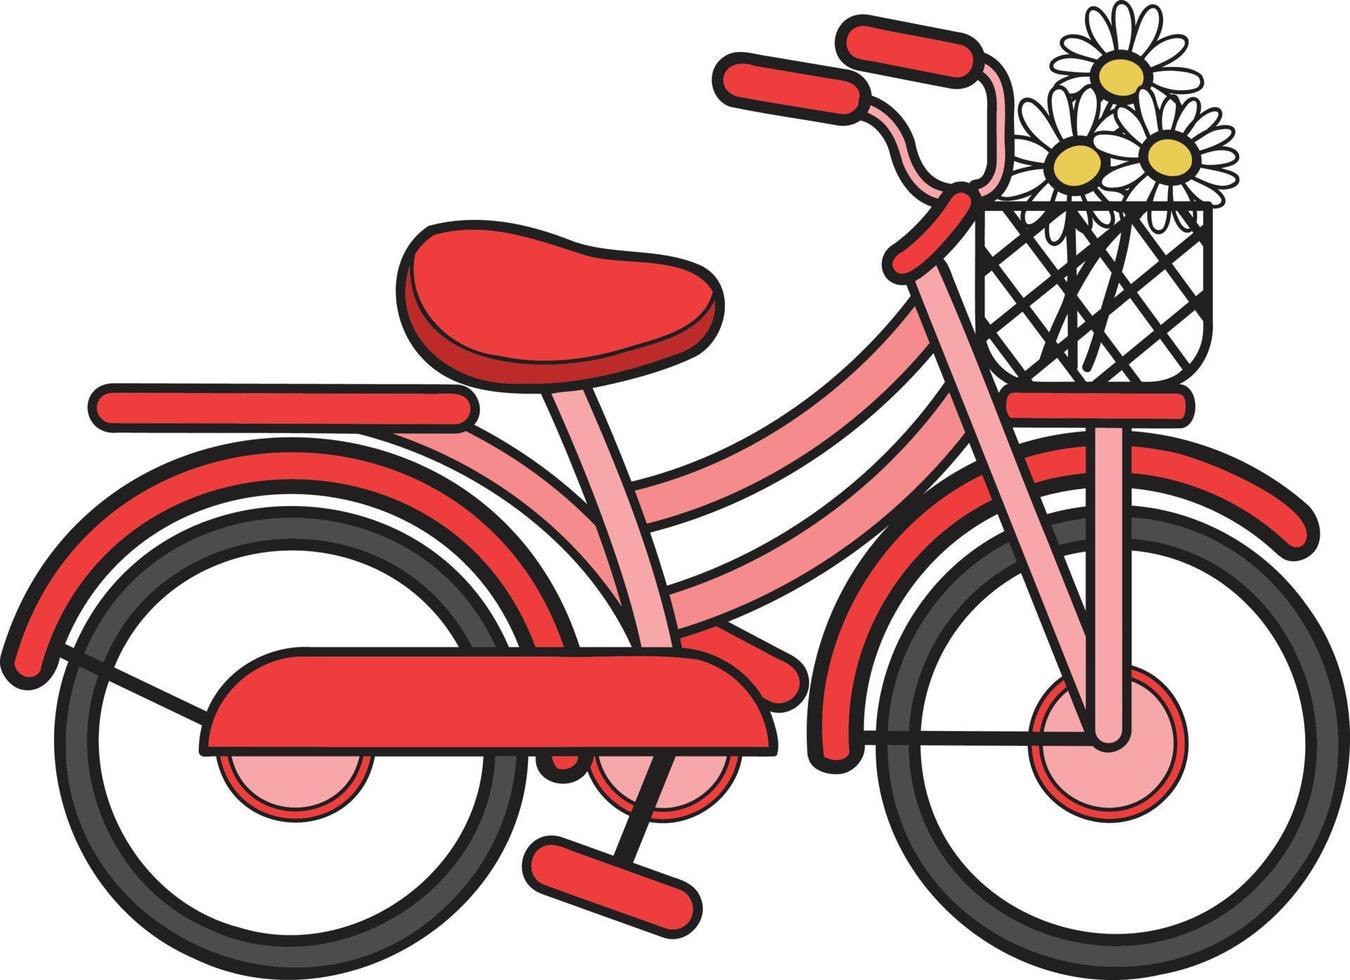 bicicleta dibujada a mano con ilustración de flores vector